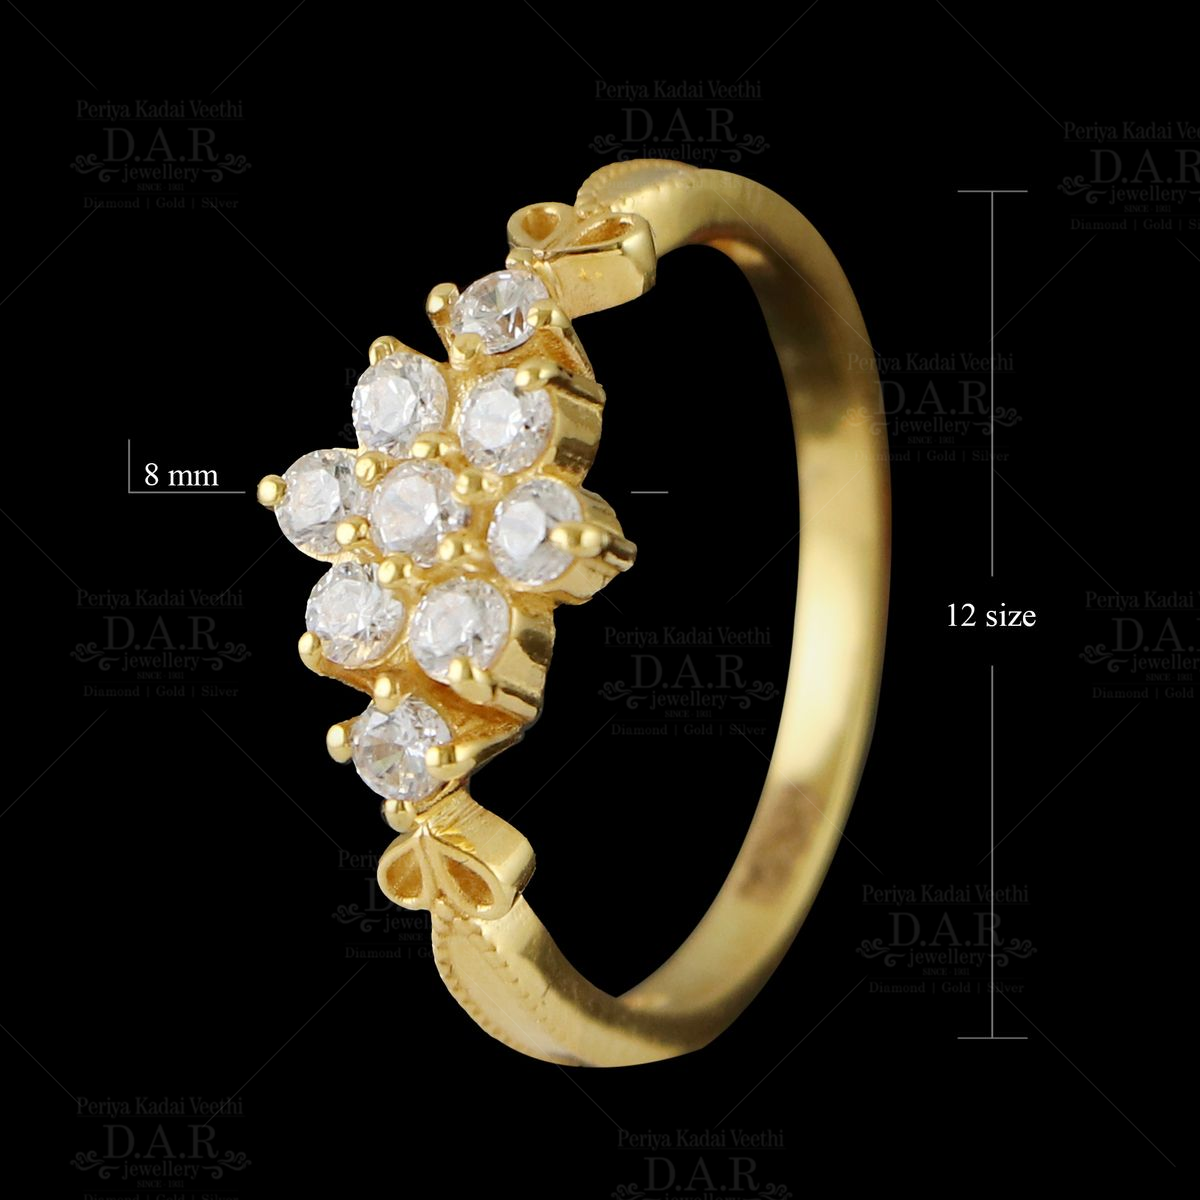 silver Ladies color stone rings 001-660-00205 Waco | Di'Amore Fine Jewelers  | Waco, TX